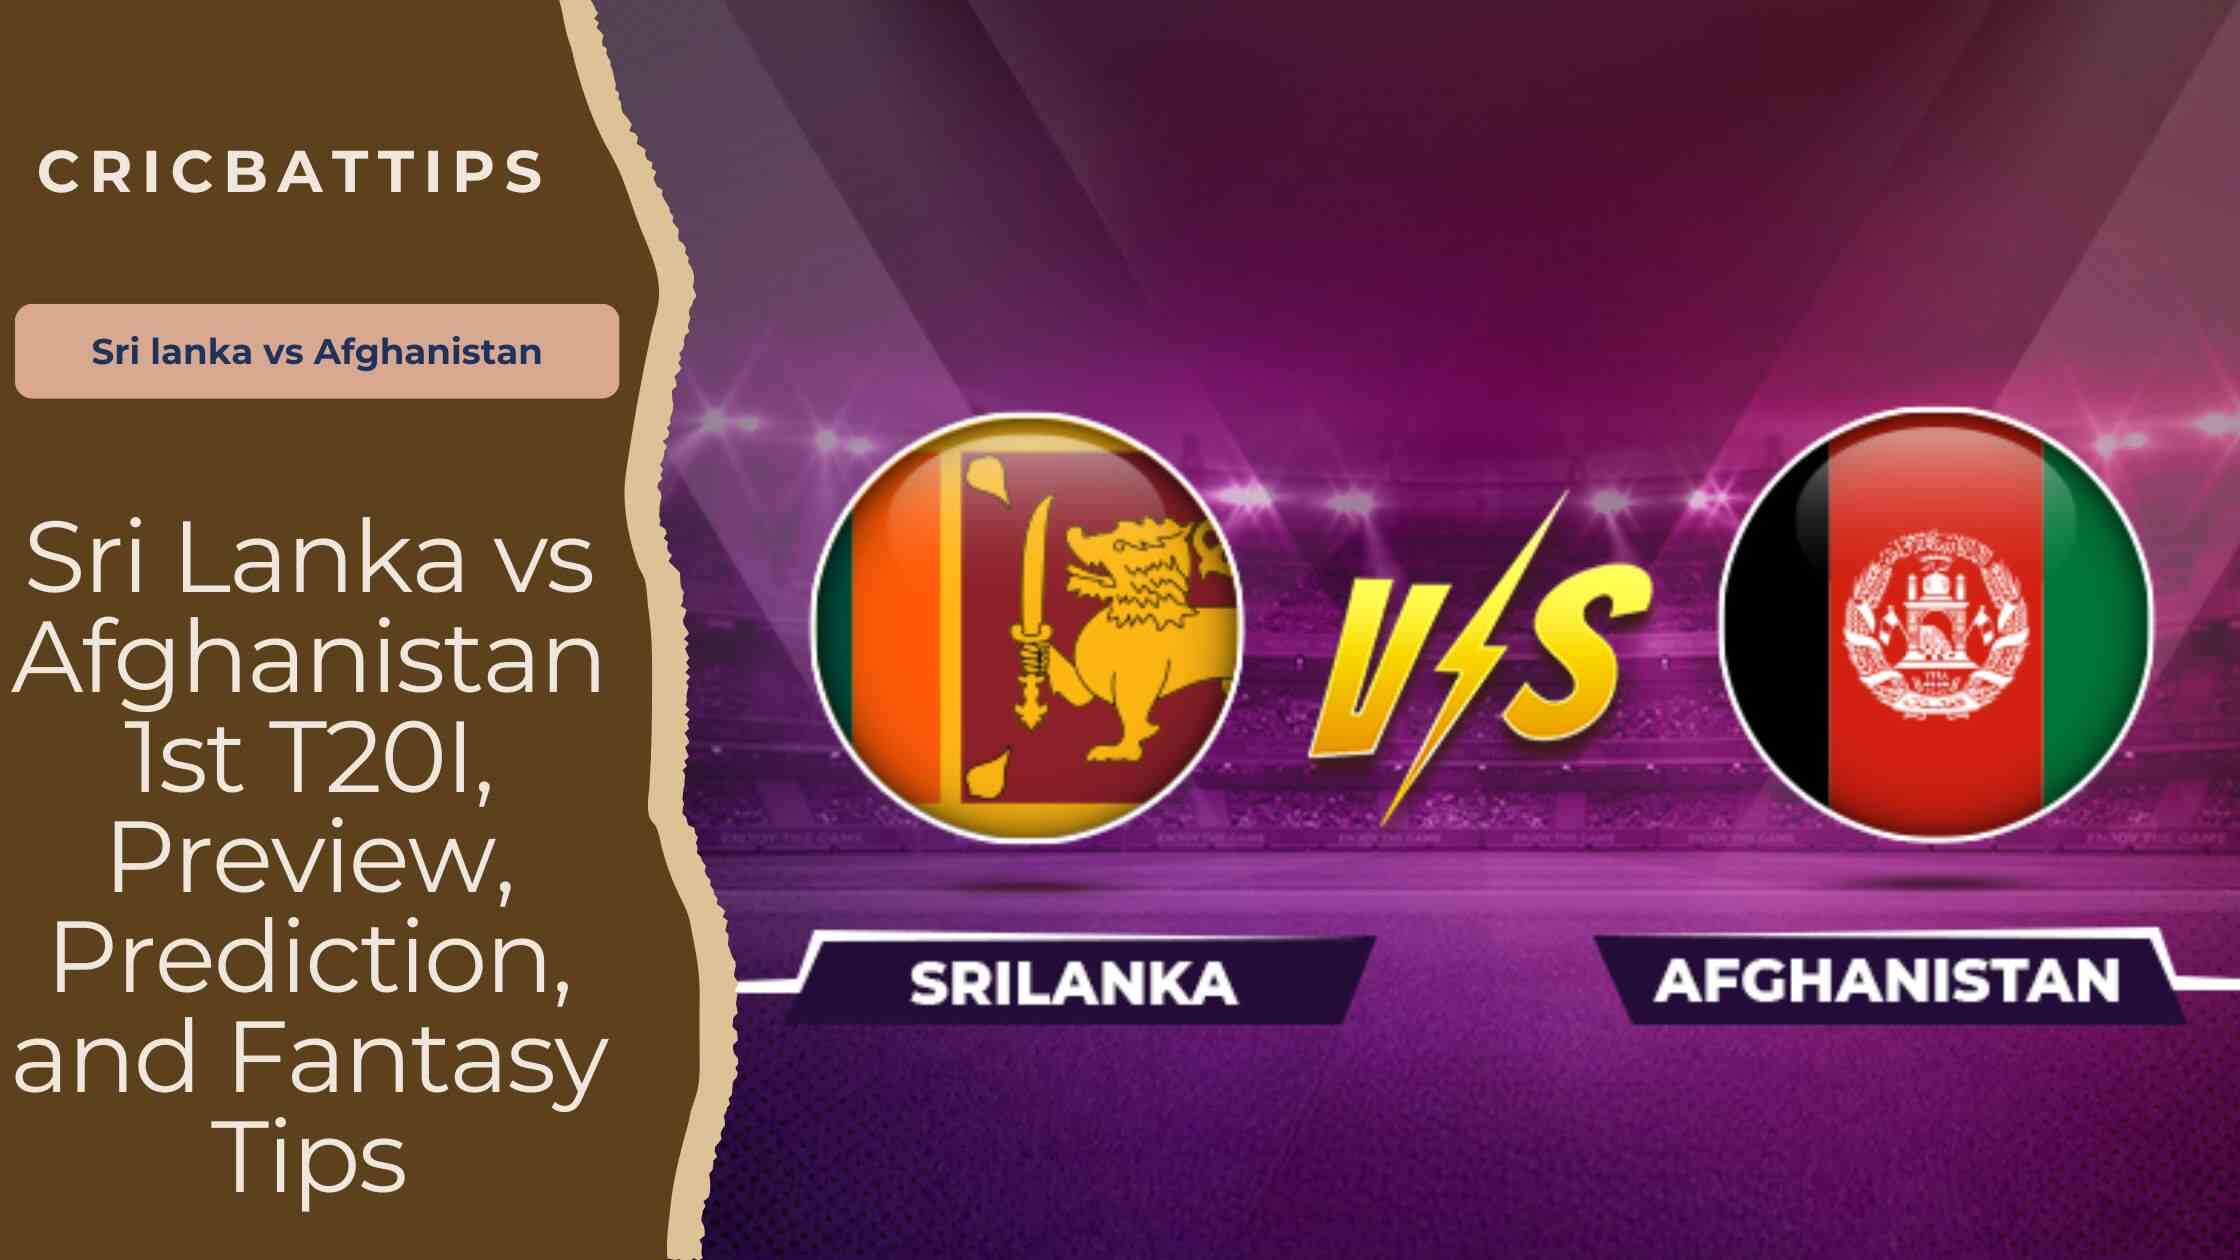 Sri Lanka vs Afghanistan Preview, Prediction and Fantasy Tips